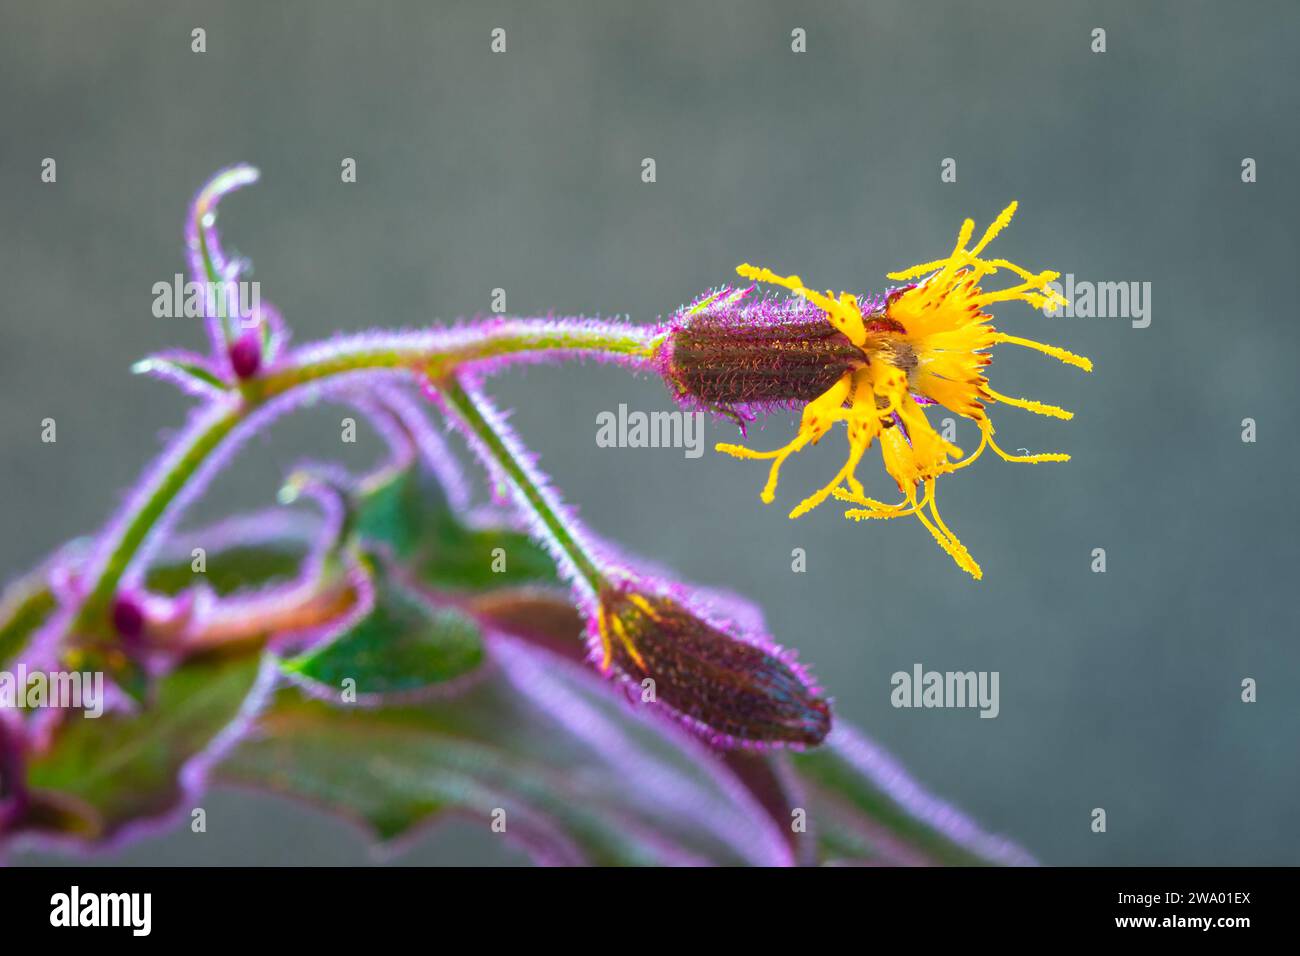 Macro image of the yellow flower of a purple-green leafy Gynura plant (Gynura aurantiaca). Stock Photo